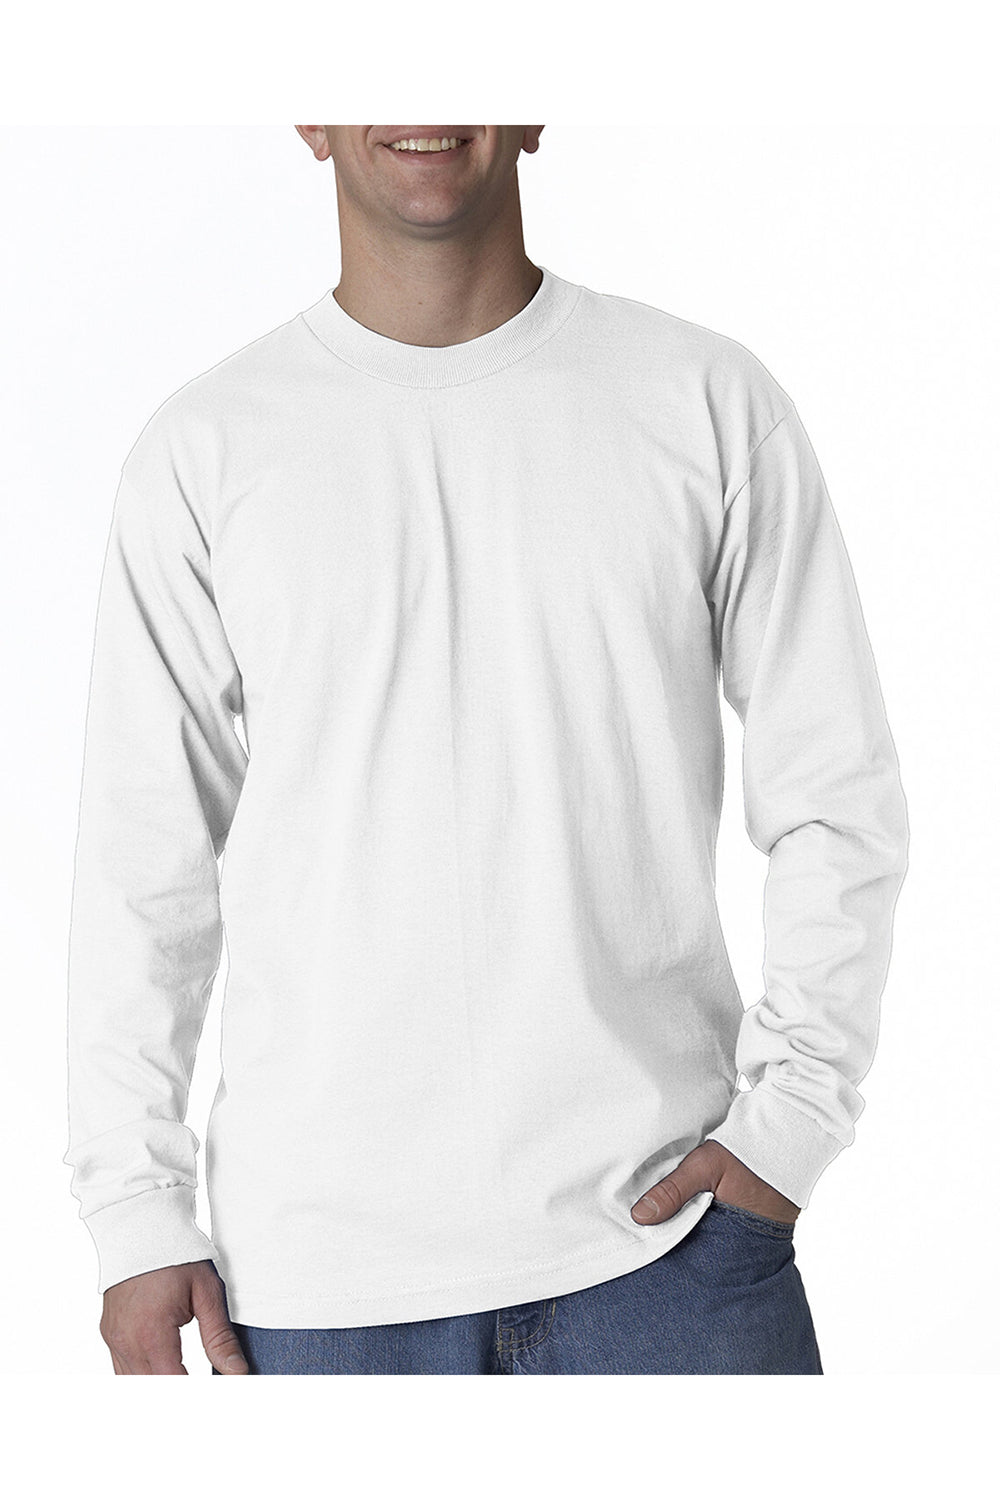 Bayside BA2955 Mens USA Made Long Sleeve Crewneck T-Shirt White Model Front